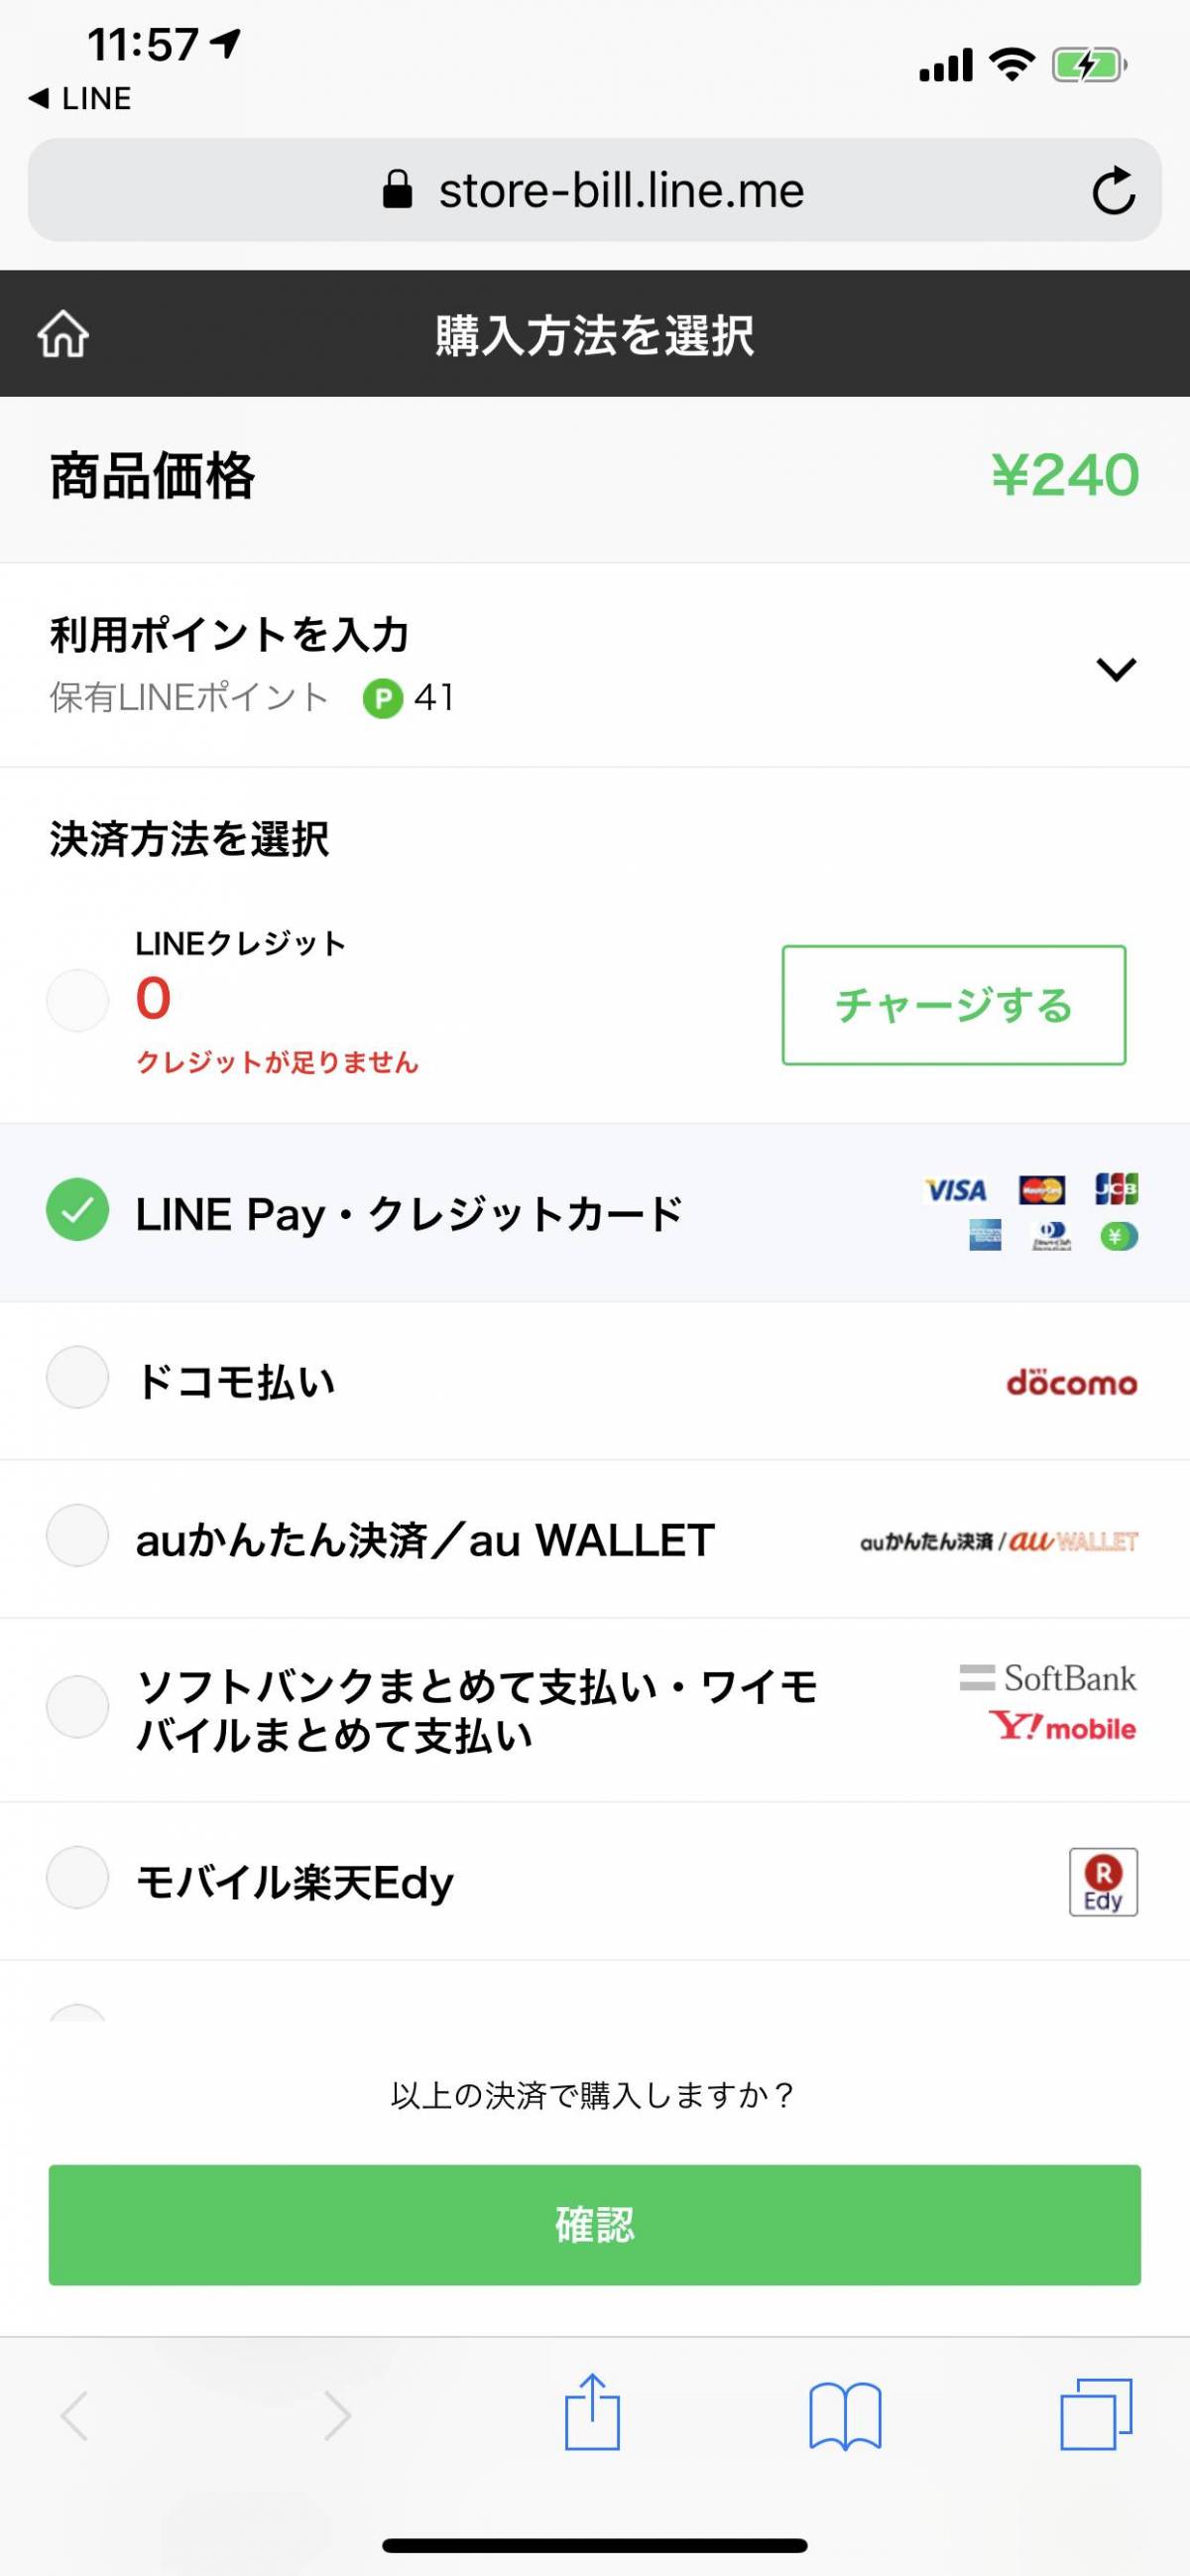 Line Store Line Pay決済でスタンプ マンガコイン ゲームアイテムが実質1円 5 2まで Appliv Topics